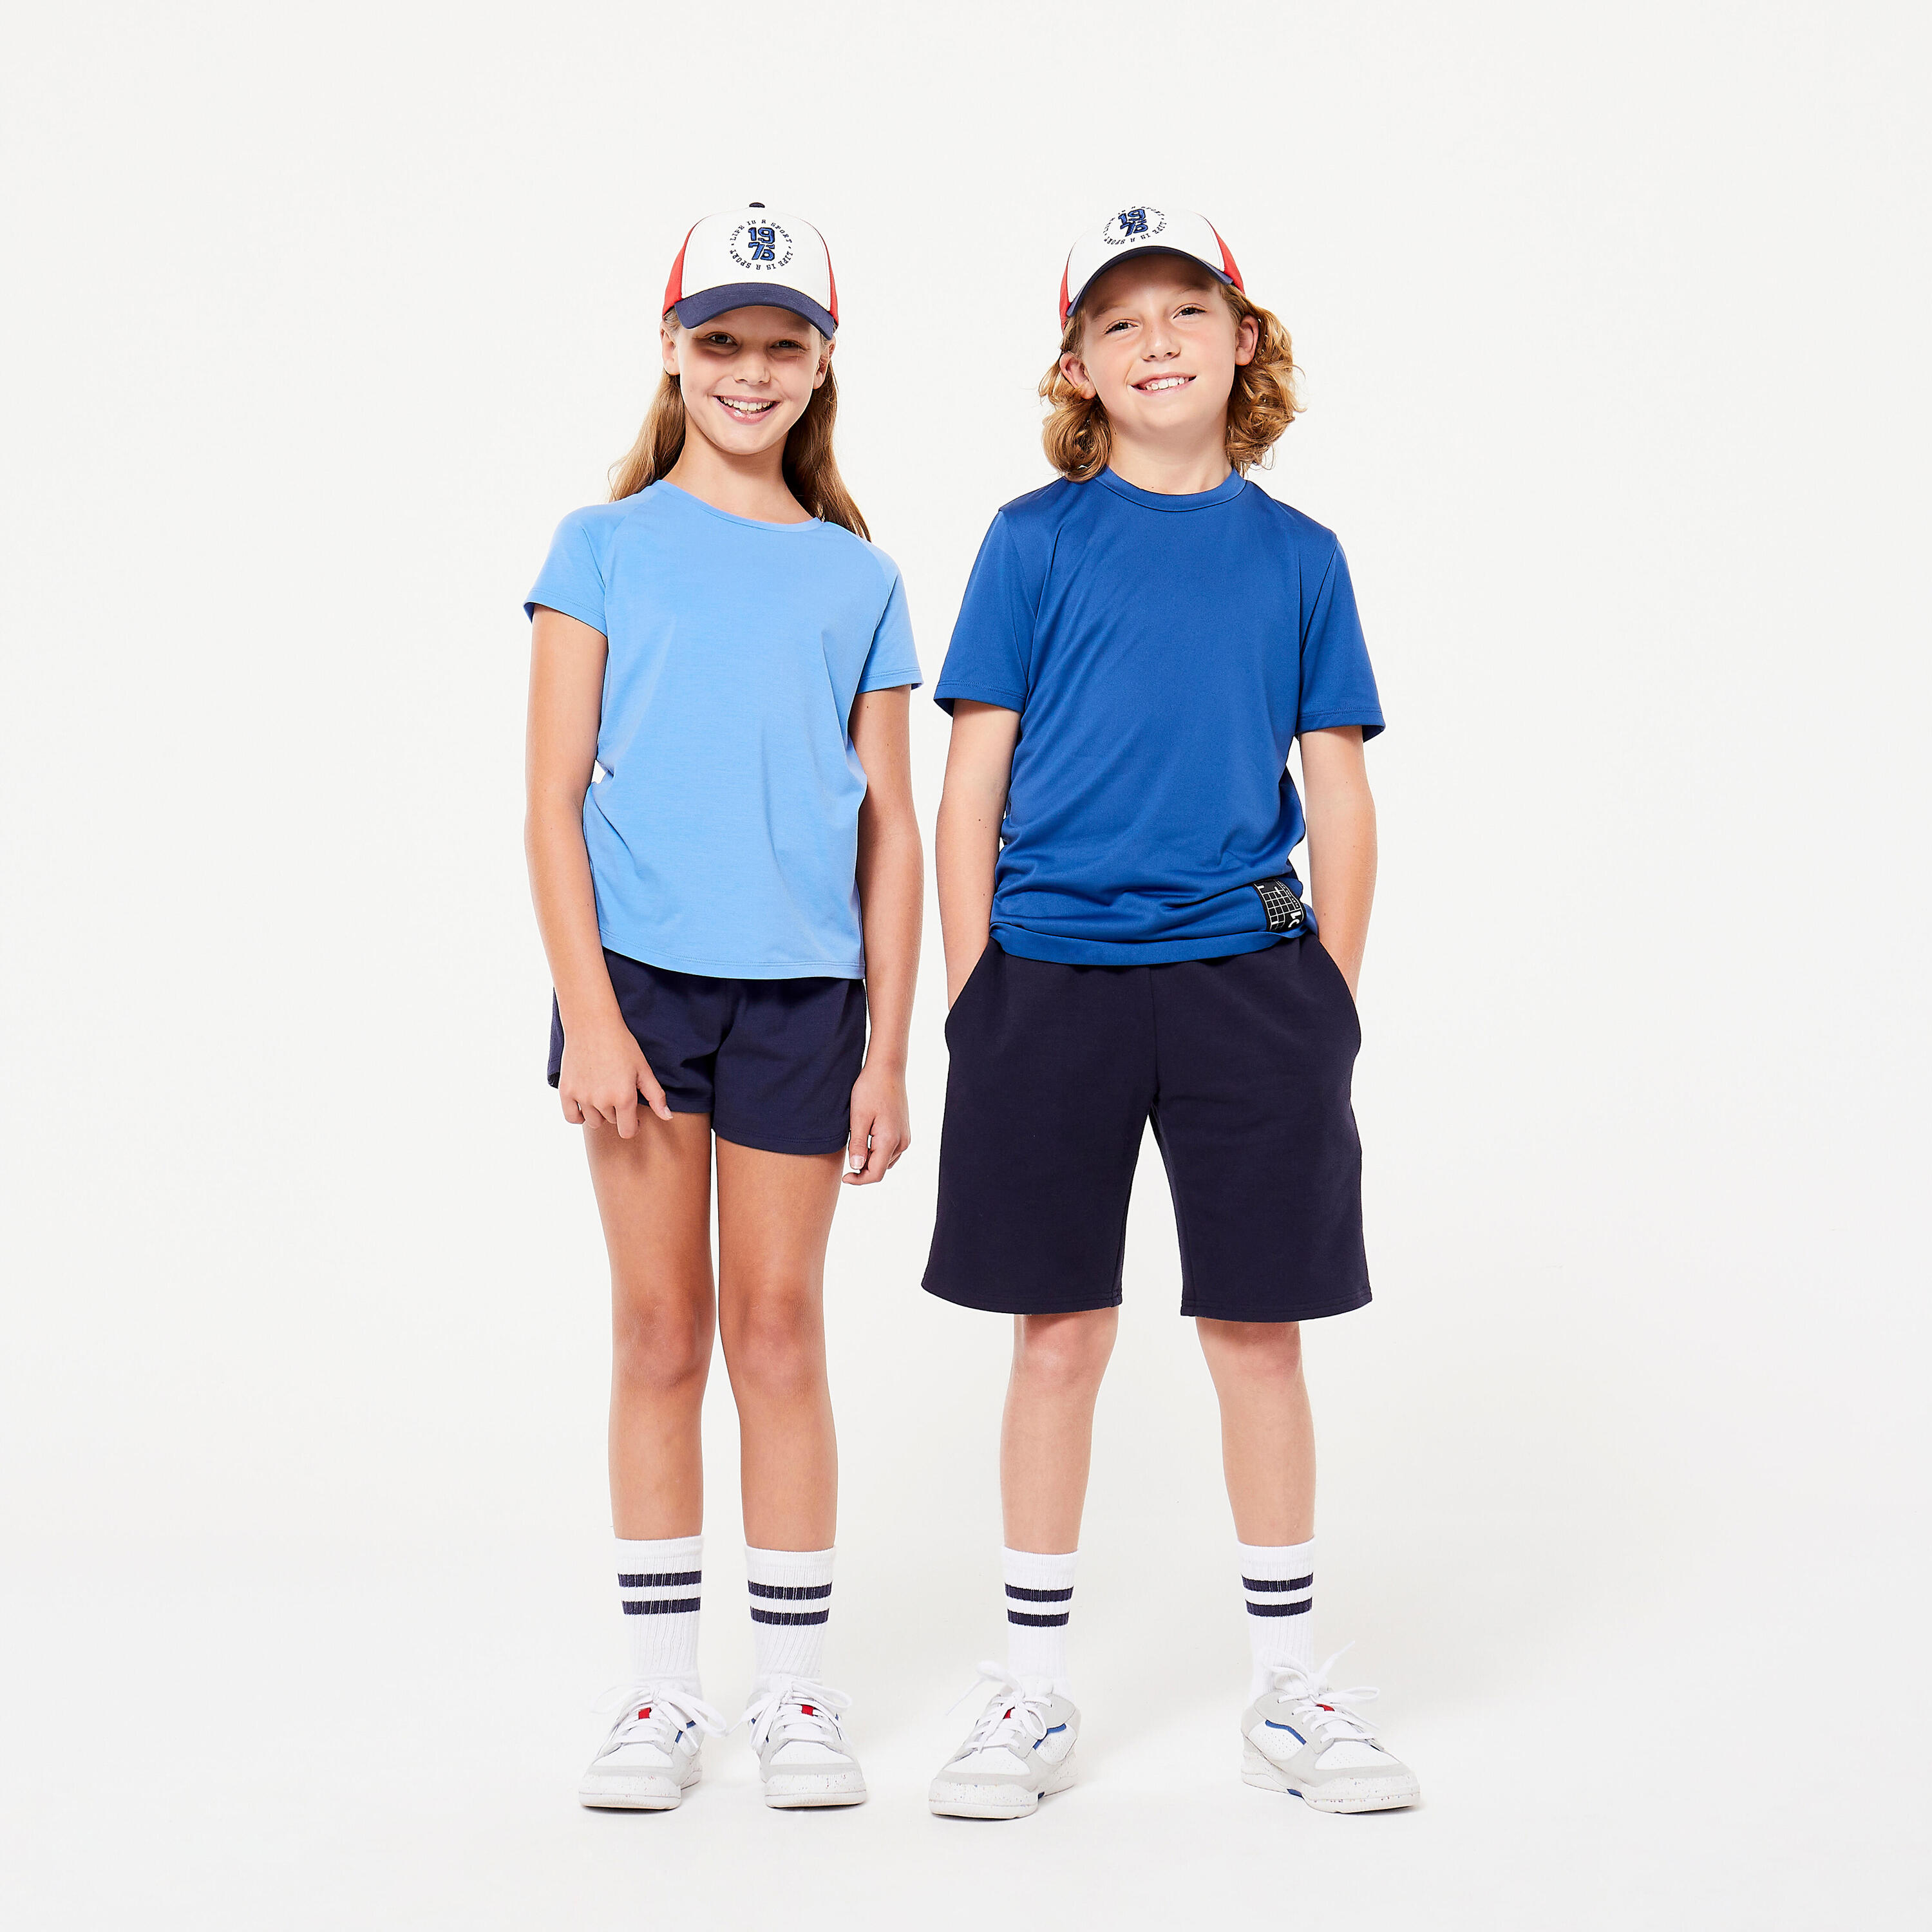 Kids' Cap W500 - Blue/White/Red 4/6